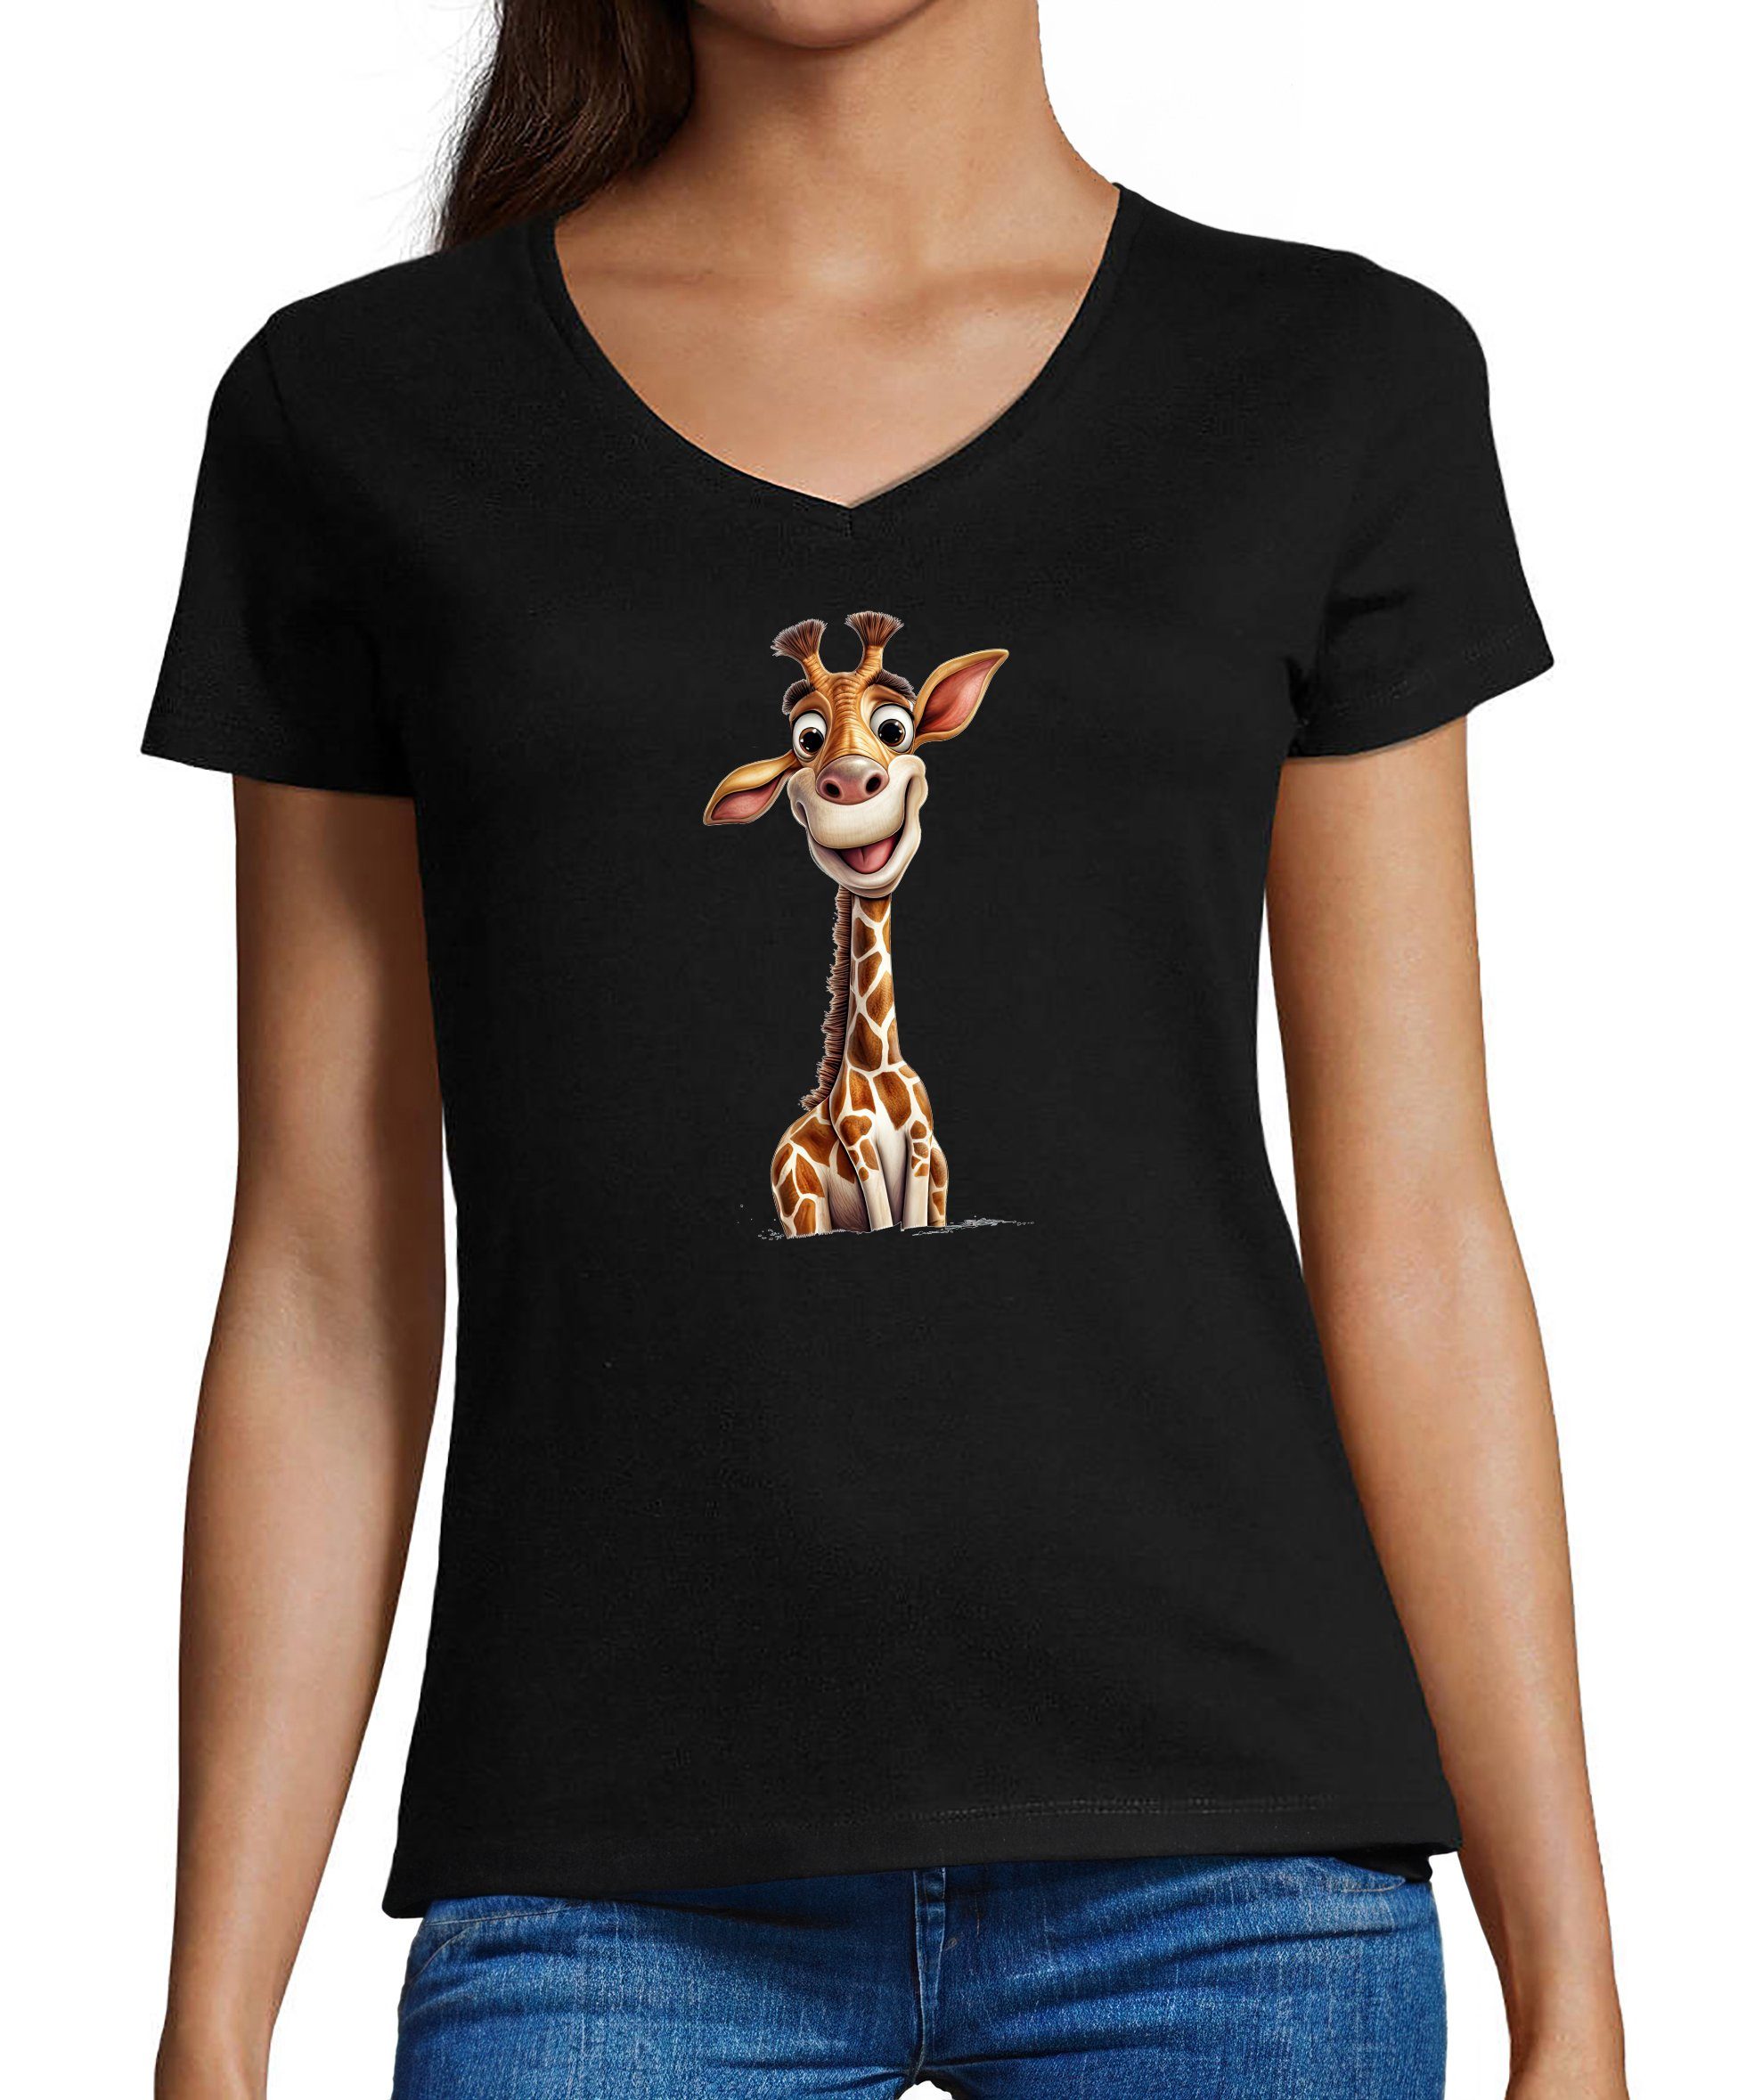 MyDesign24 T-Shirt Damen Wildtier Print Shirt - Baby Giraffe V-Ausschnitt Baumwollshirt mit Aufdruck Slim Fit, i273 schwarz | V-Shirts